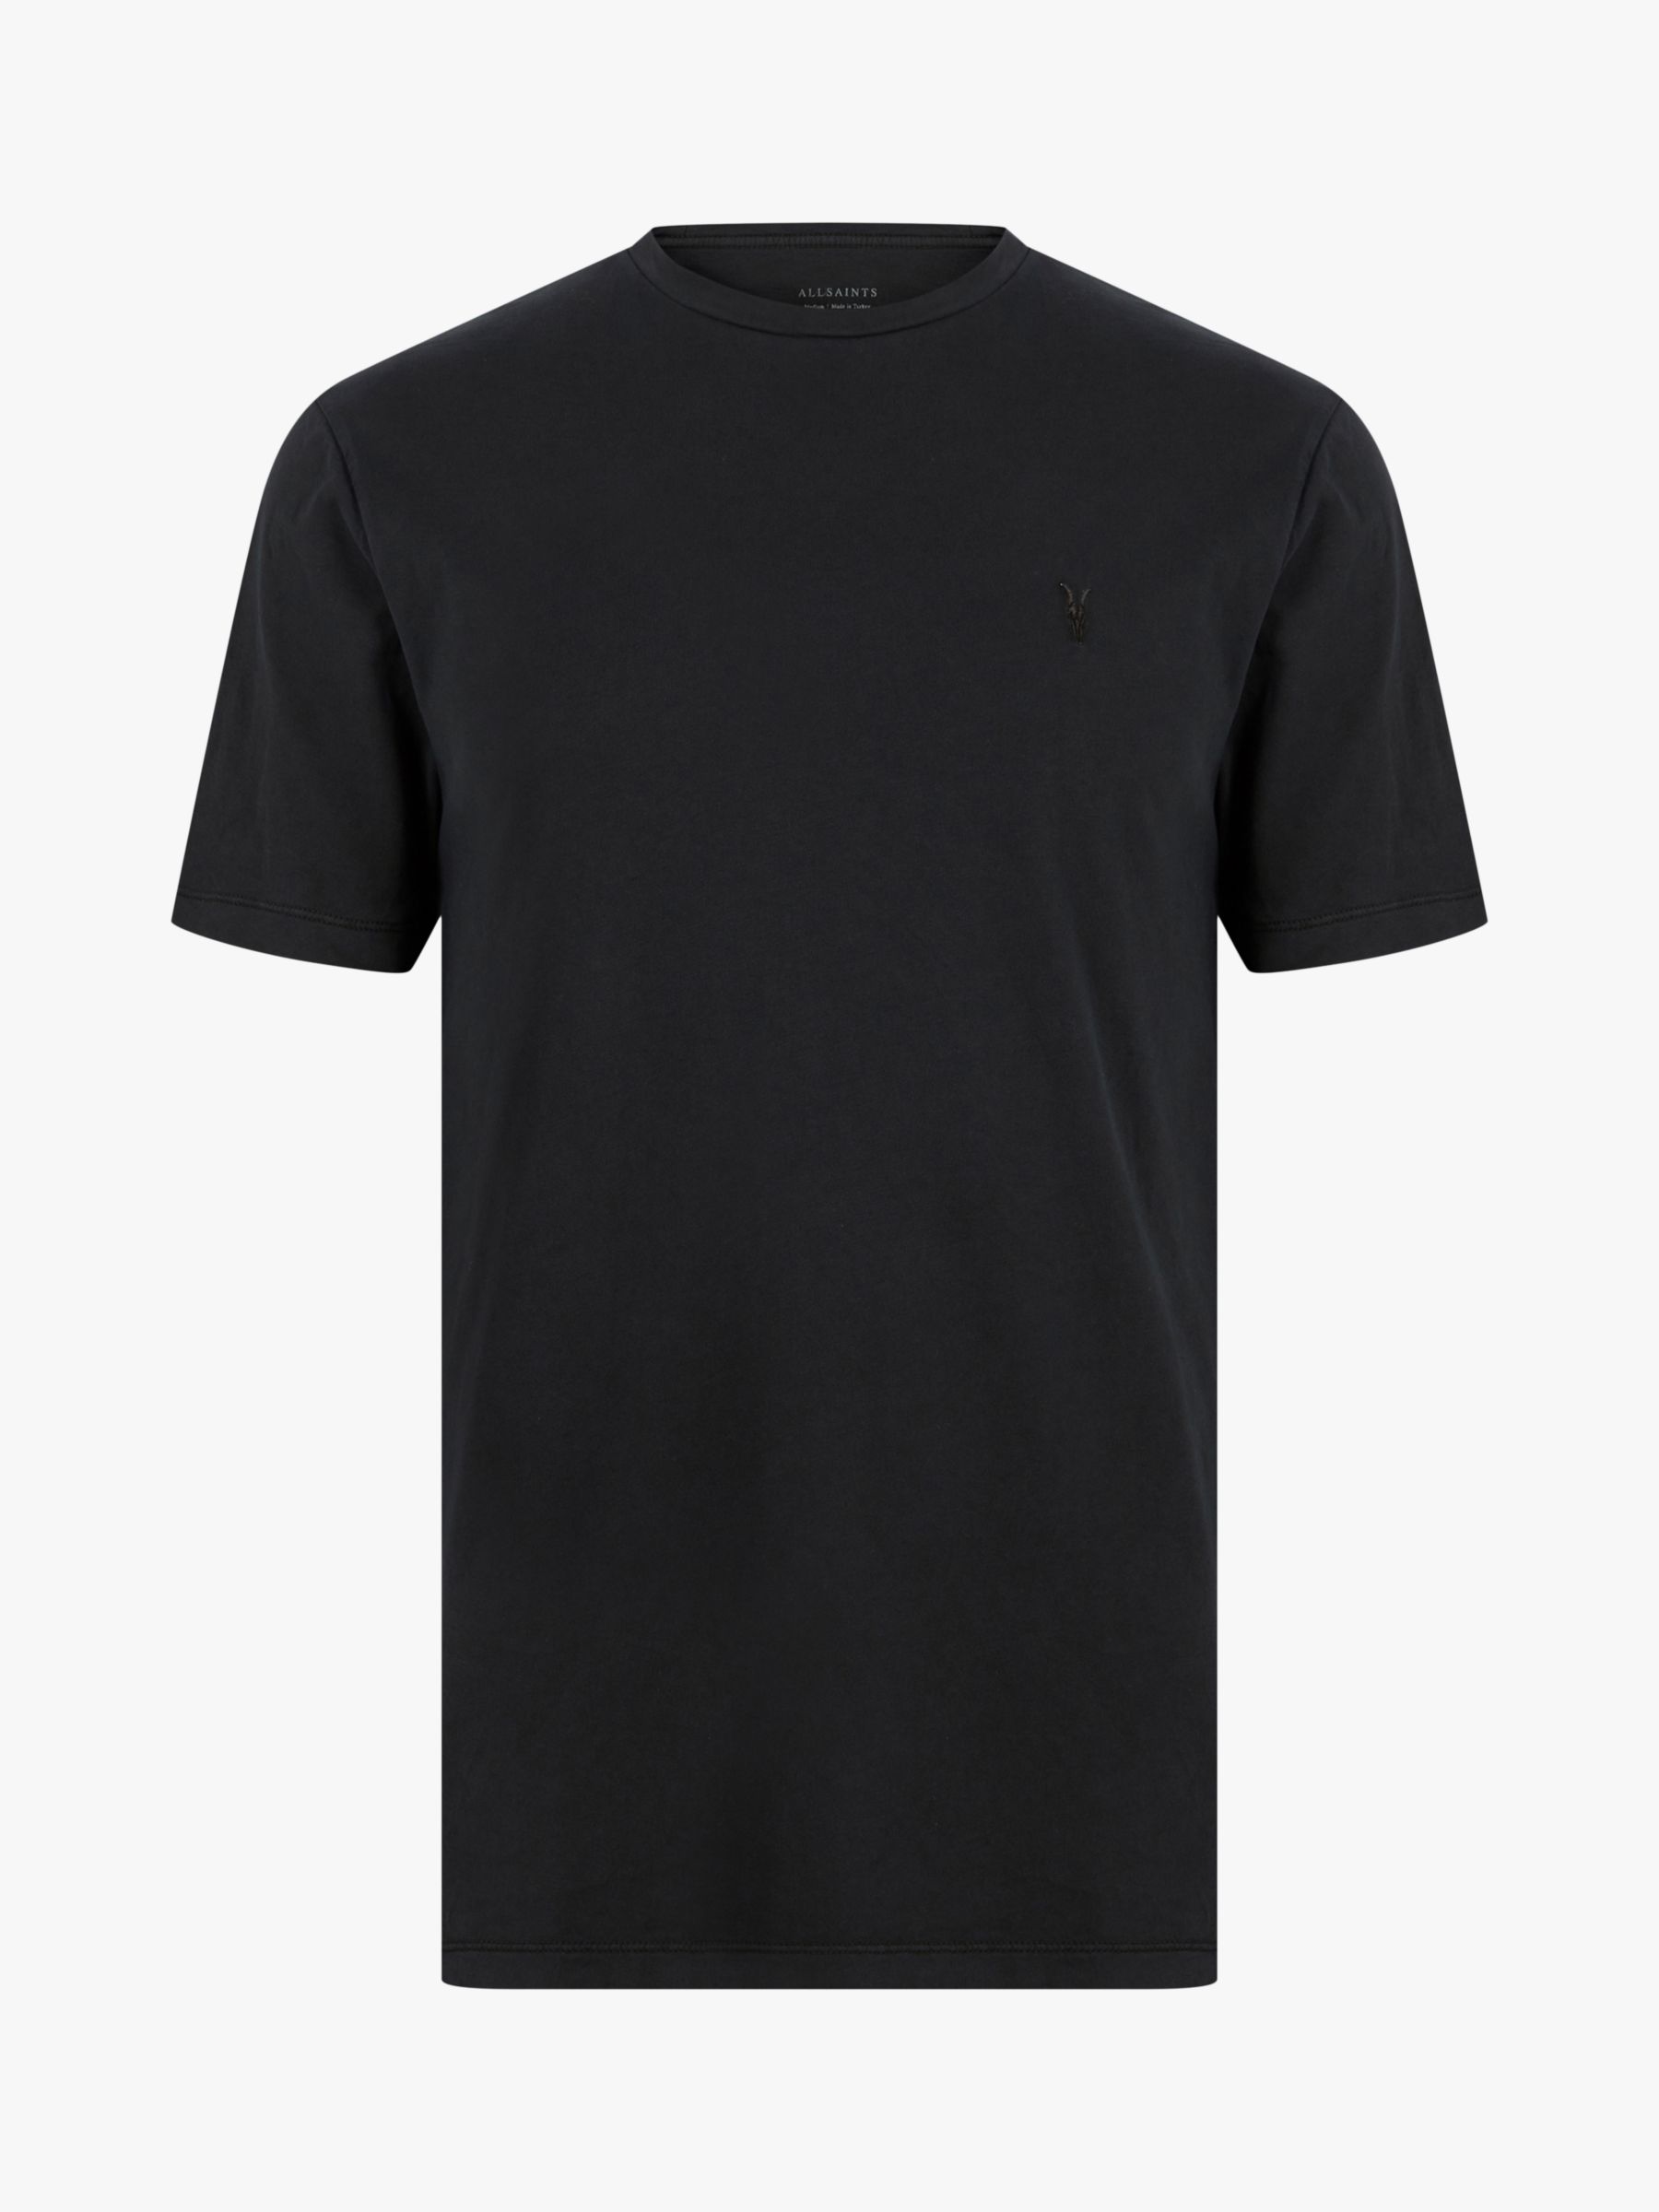 AllSaints Ossage T-Shirt, Jet Black at John Lewis & Partners